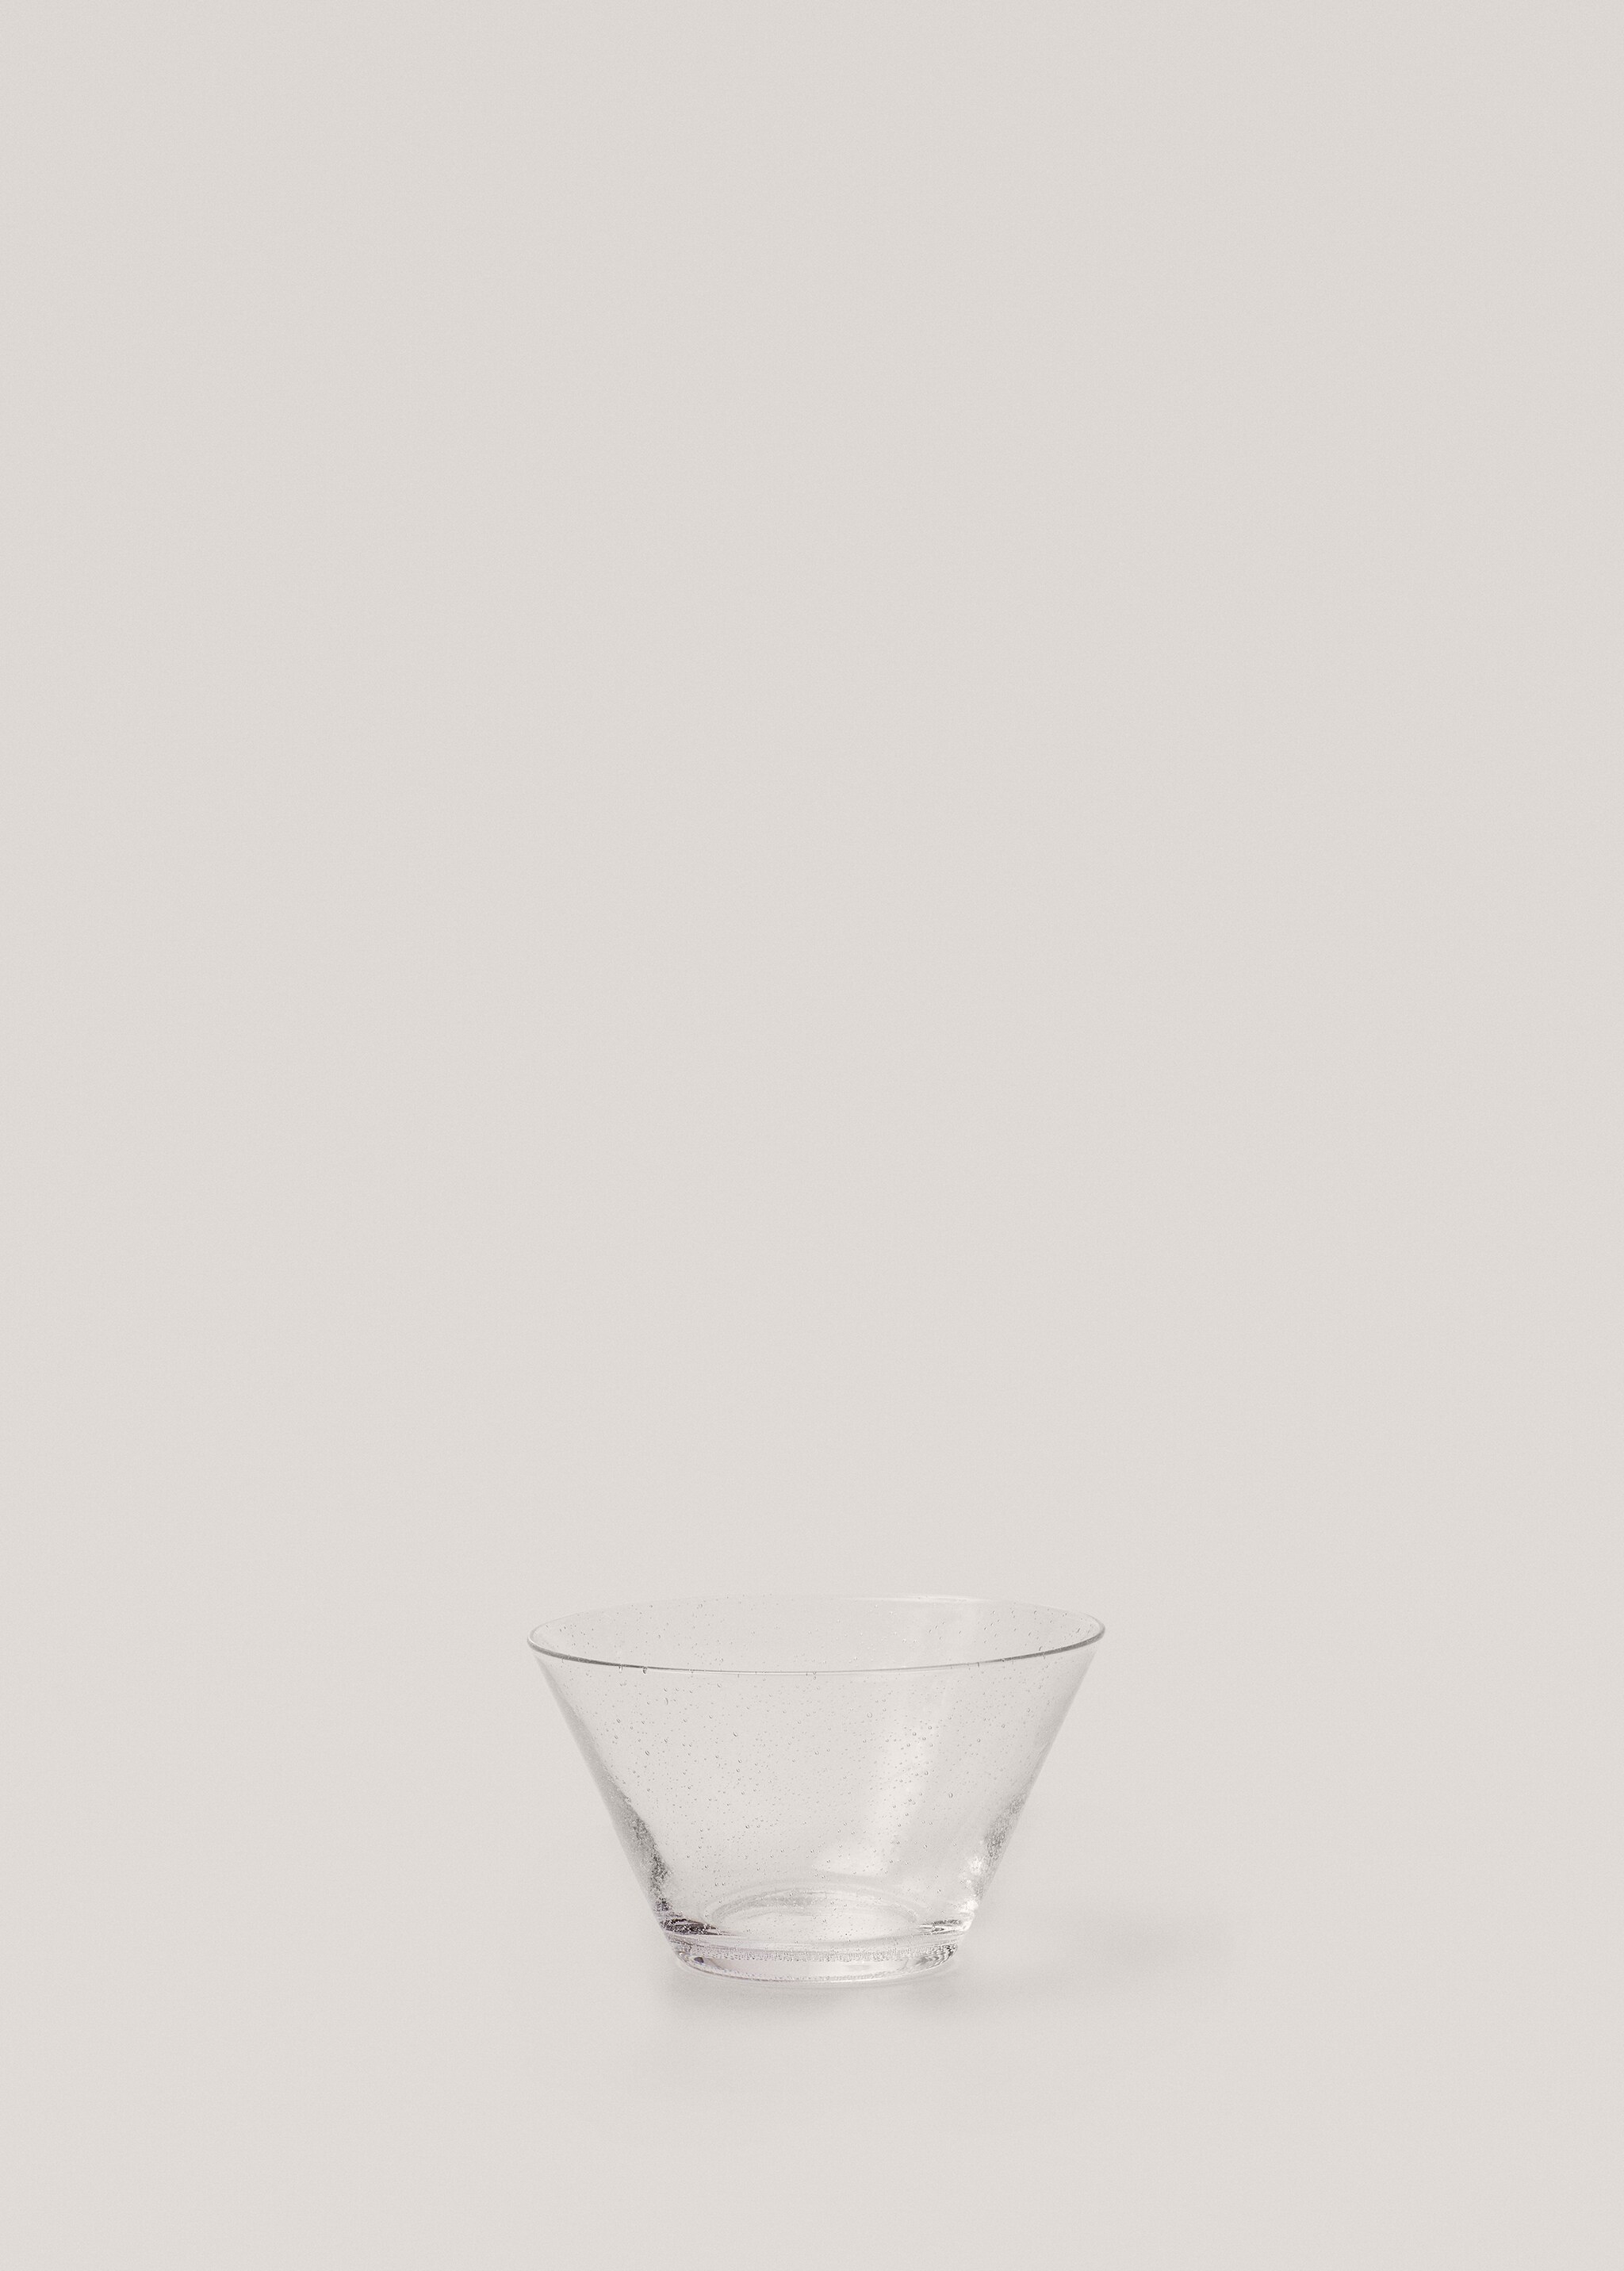 Glass transparent bubble bowl - Article without model